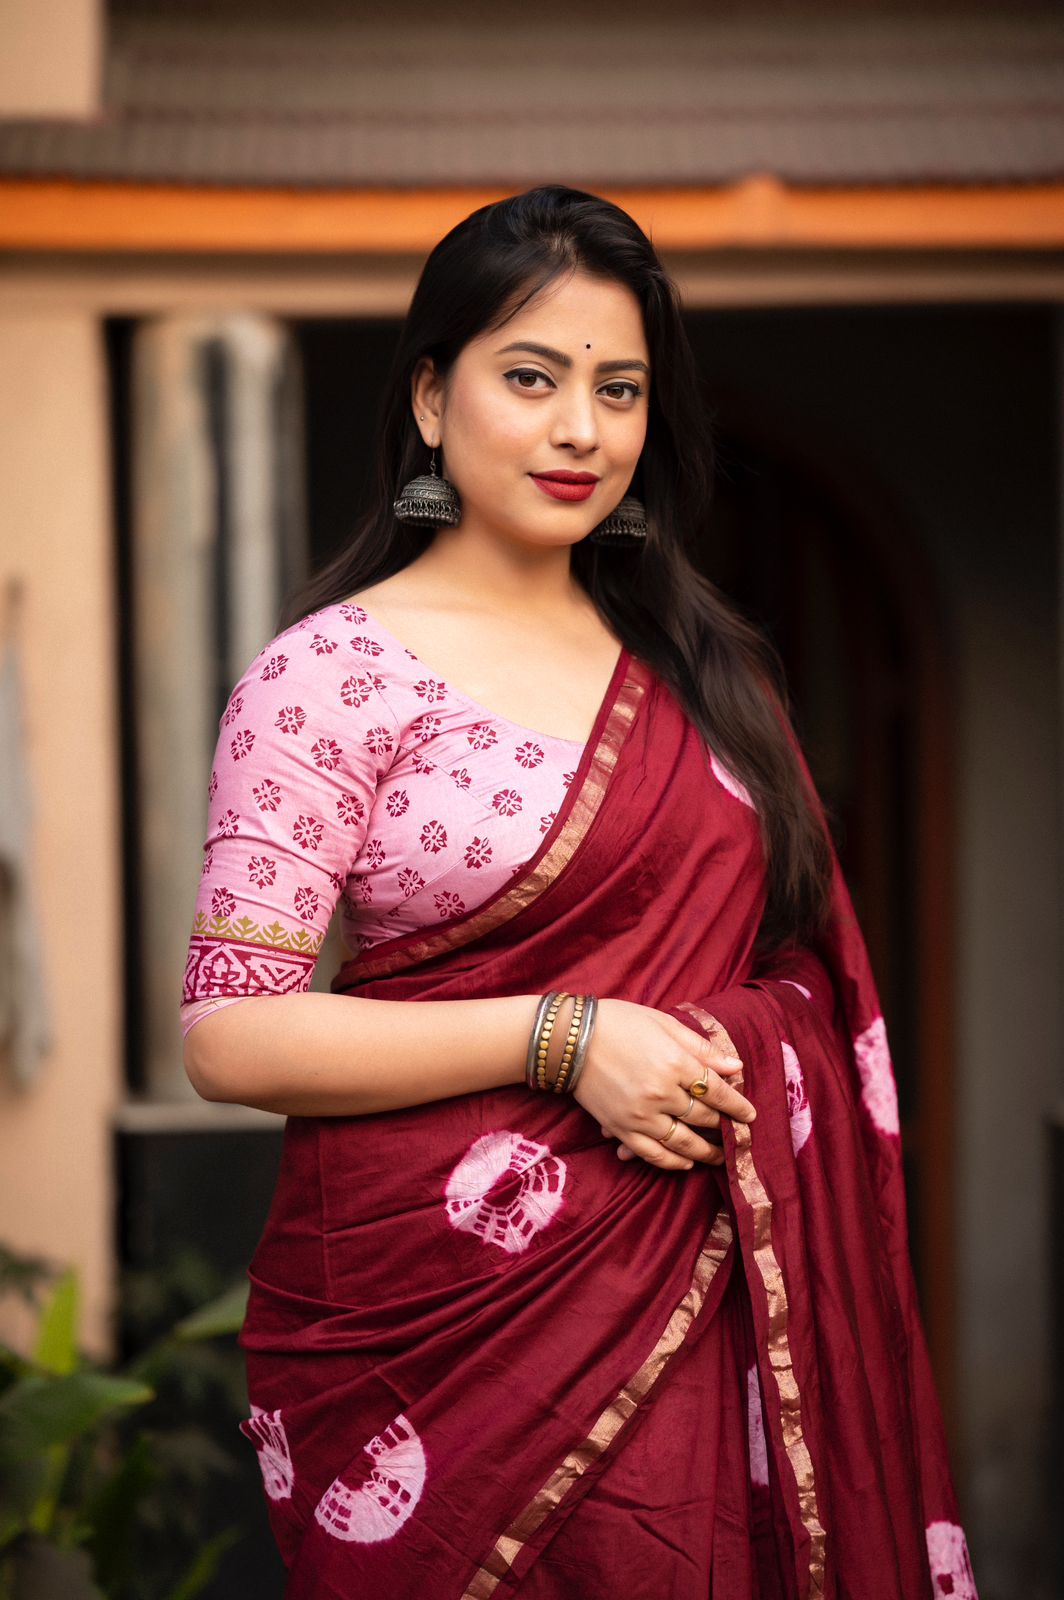 "Exquisite Shibori Cotton Saree: Handcrafted Elegance in Pure Chanderi Cotton"